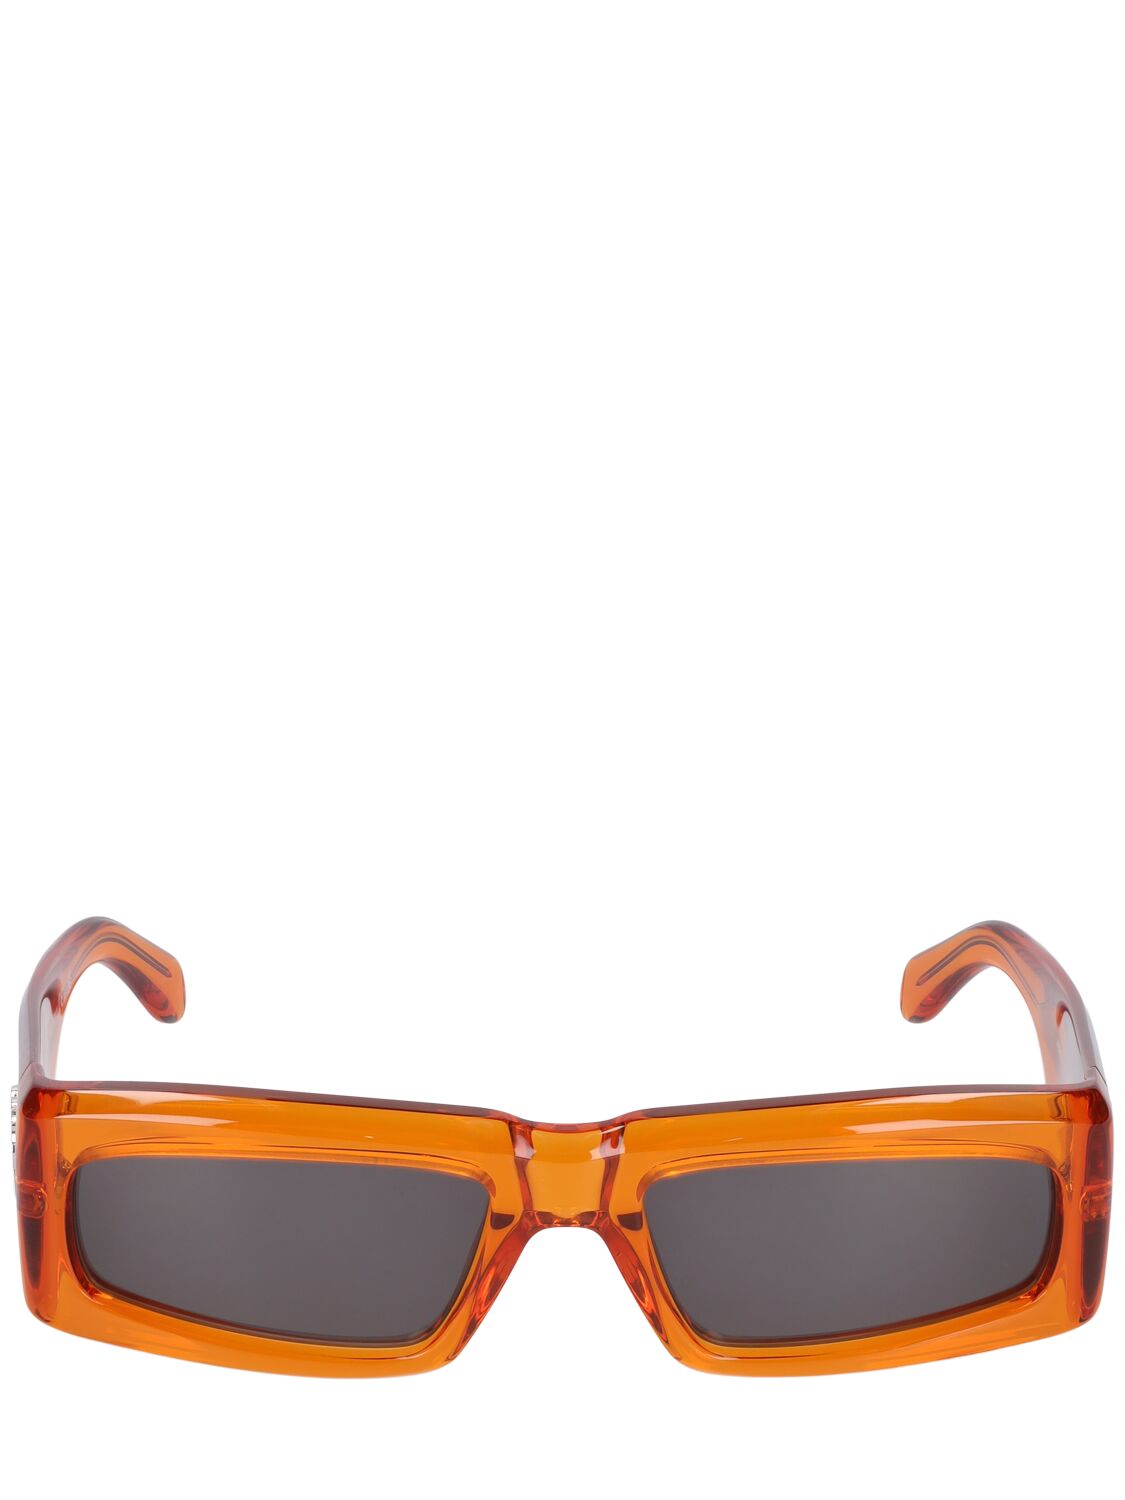 Image of Yreka Acetate Sunglasses